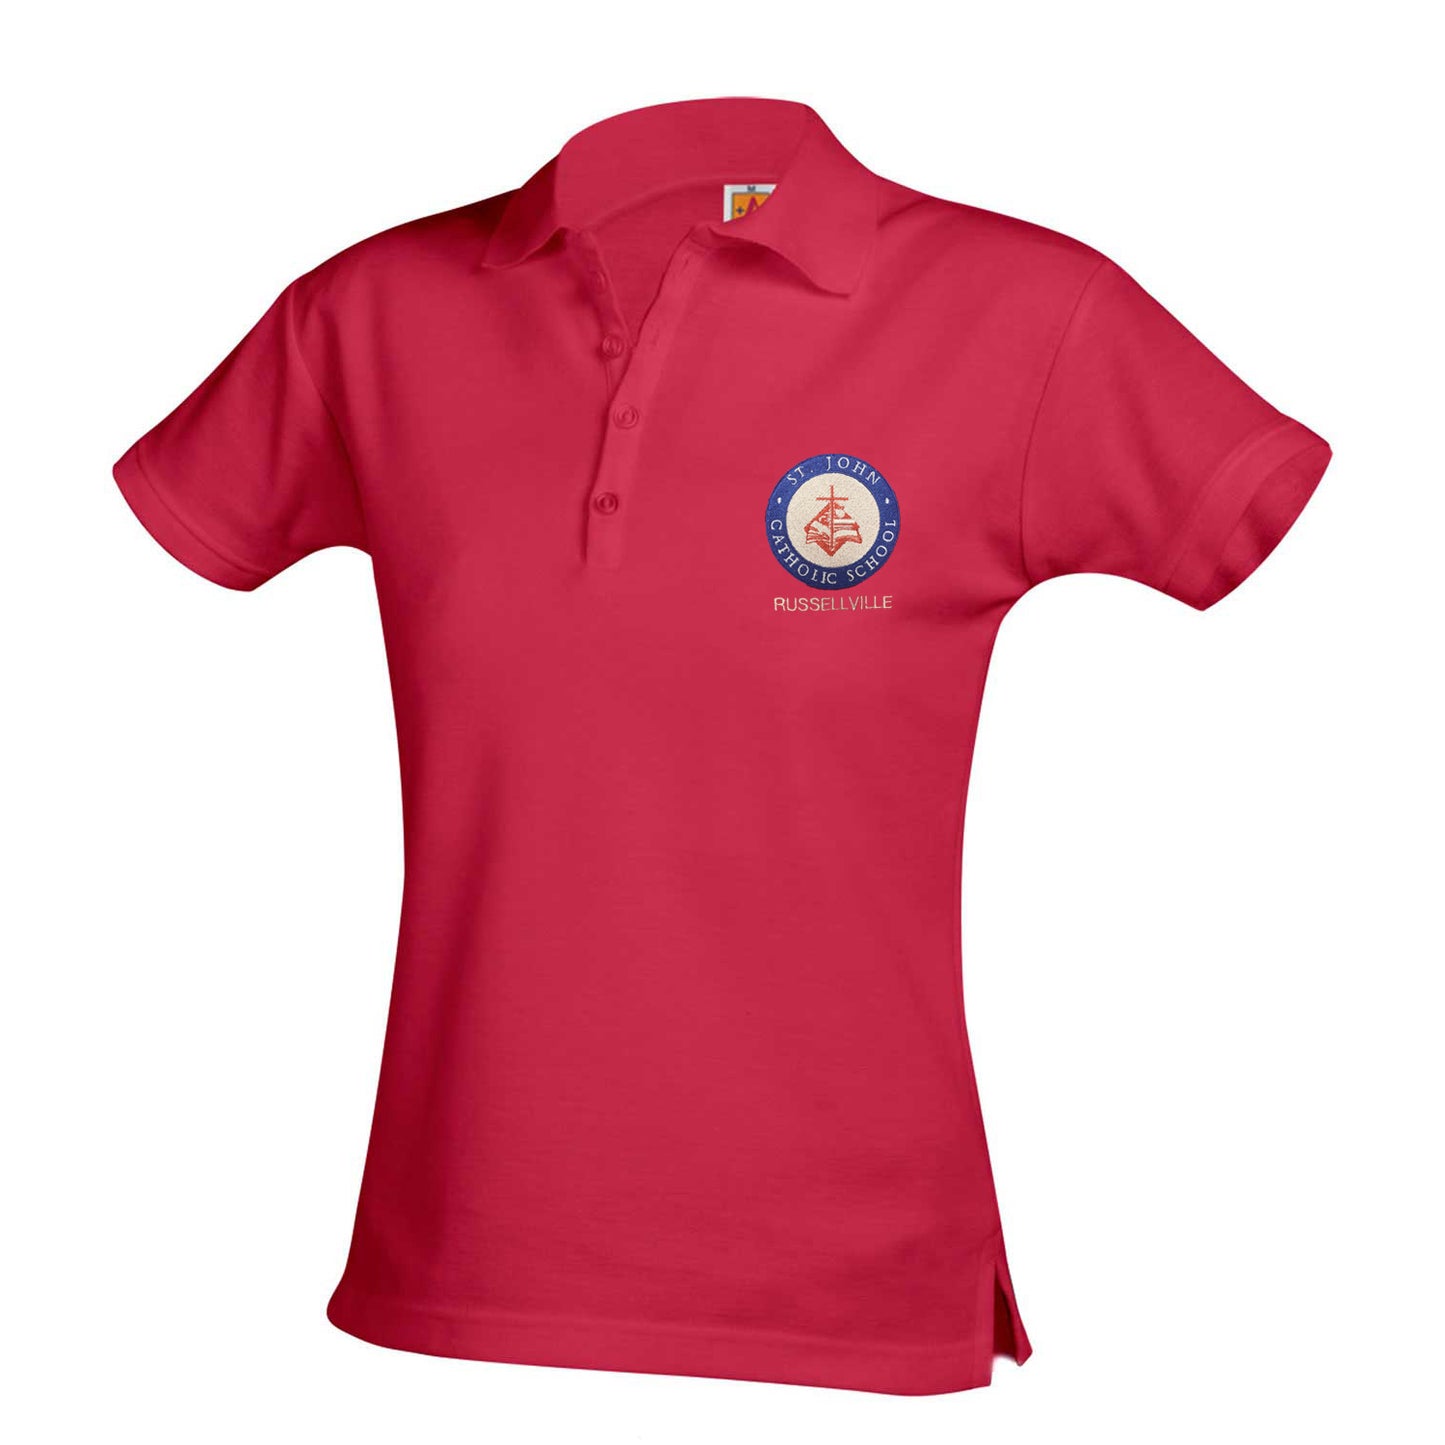 Adult Girl Cut Short Sleeve Pique Polo With St. John's Logo